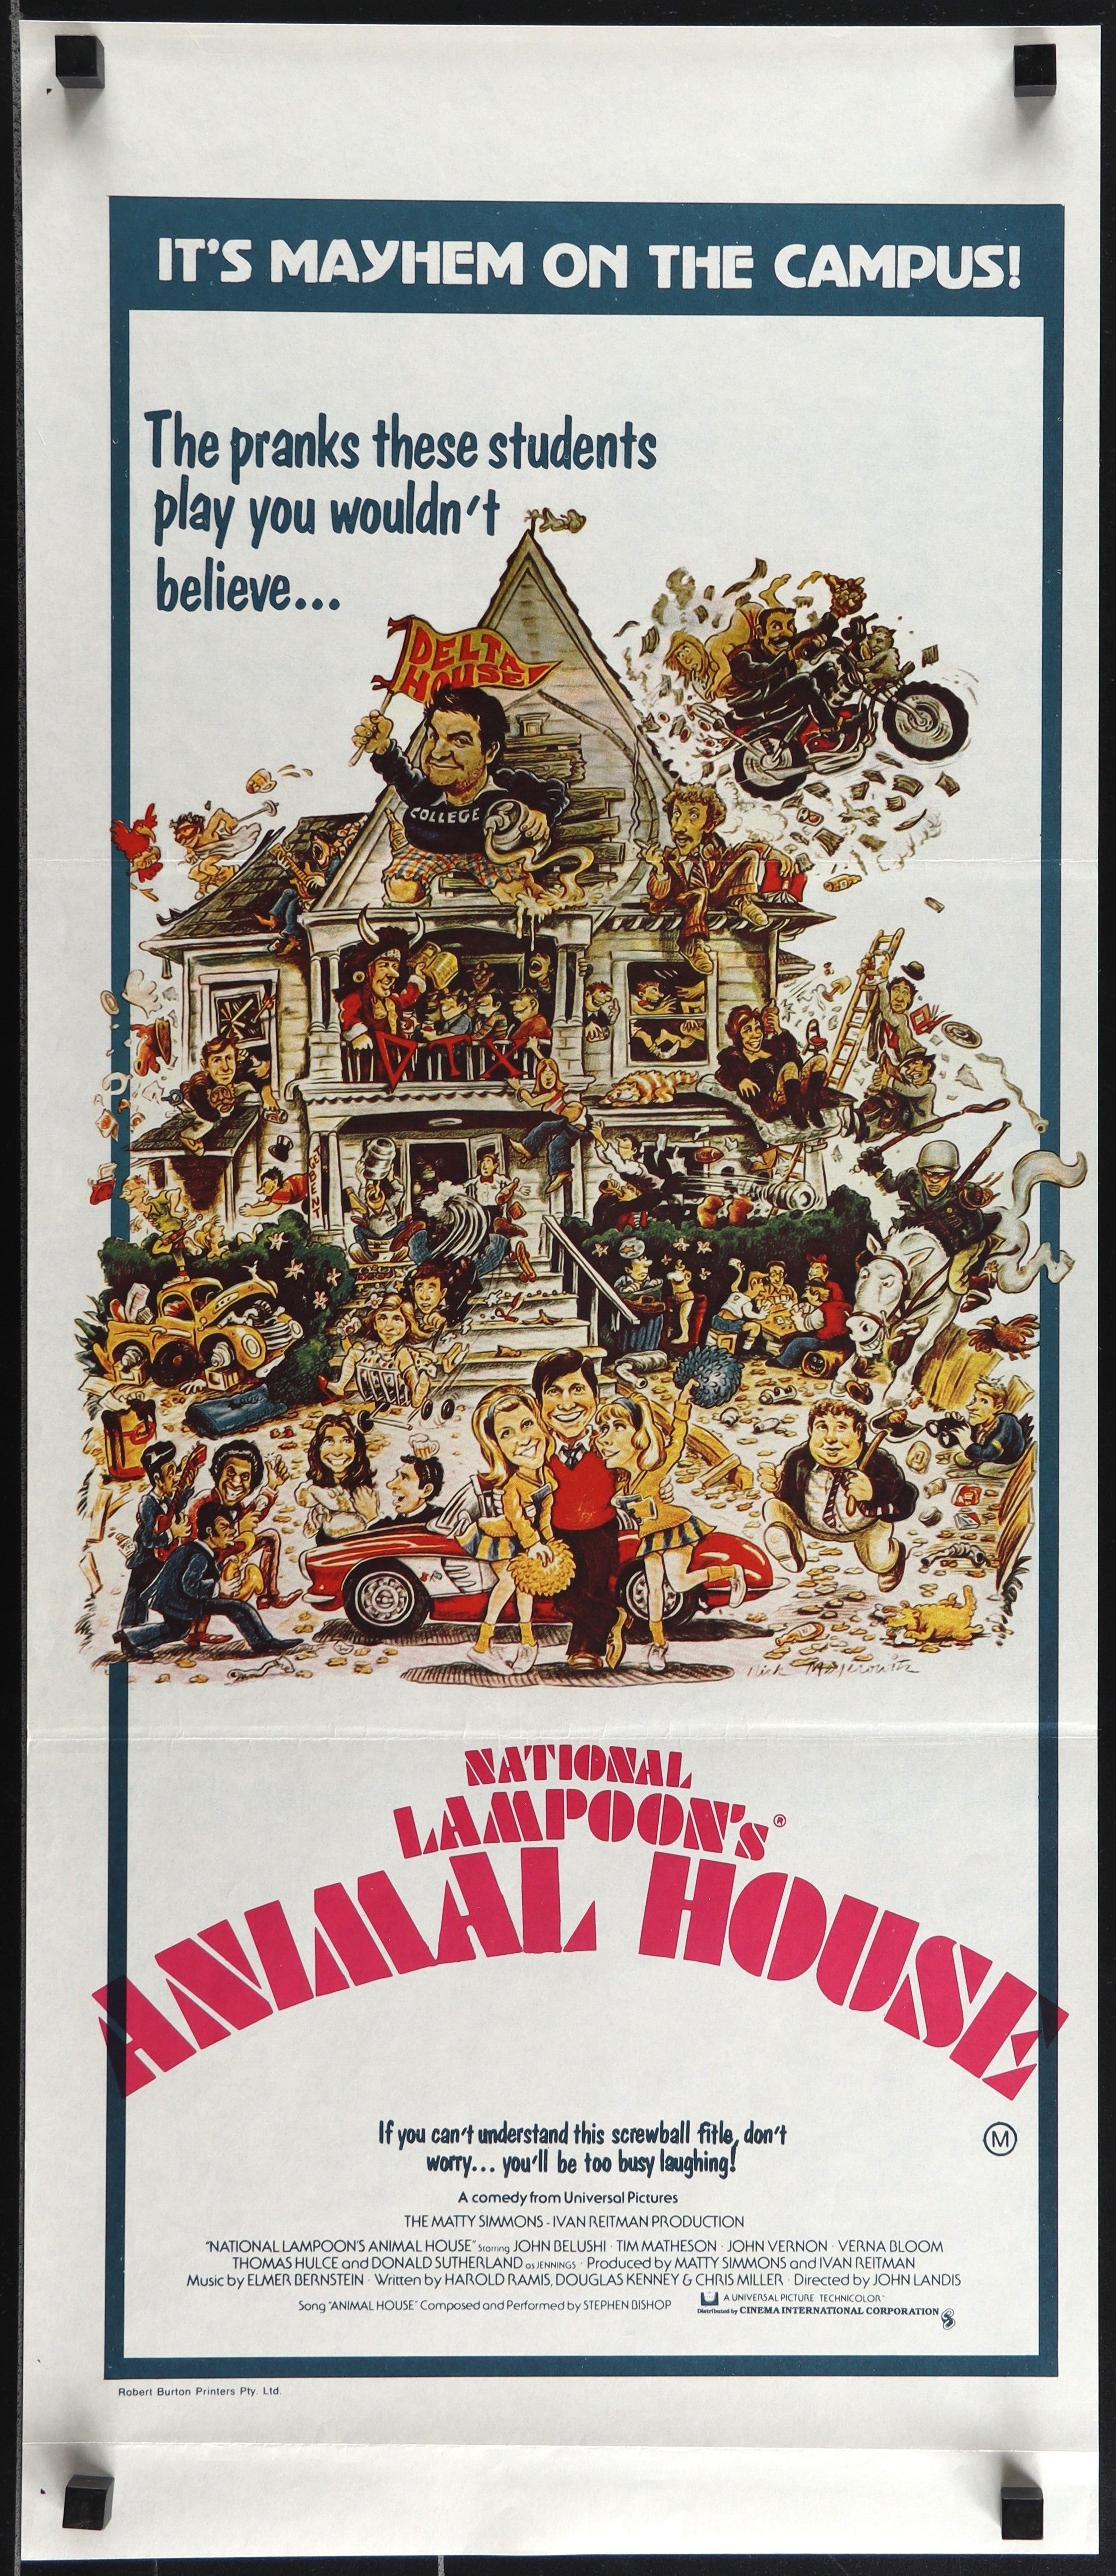 NATIONAL LAMPOON’S ANIMAL HOUSE (1979)